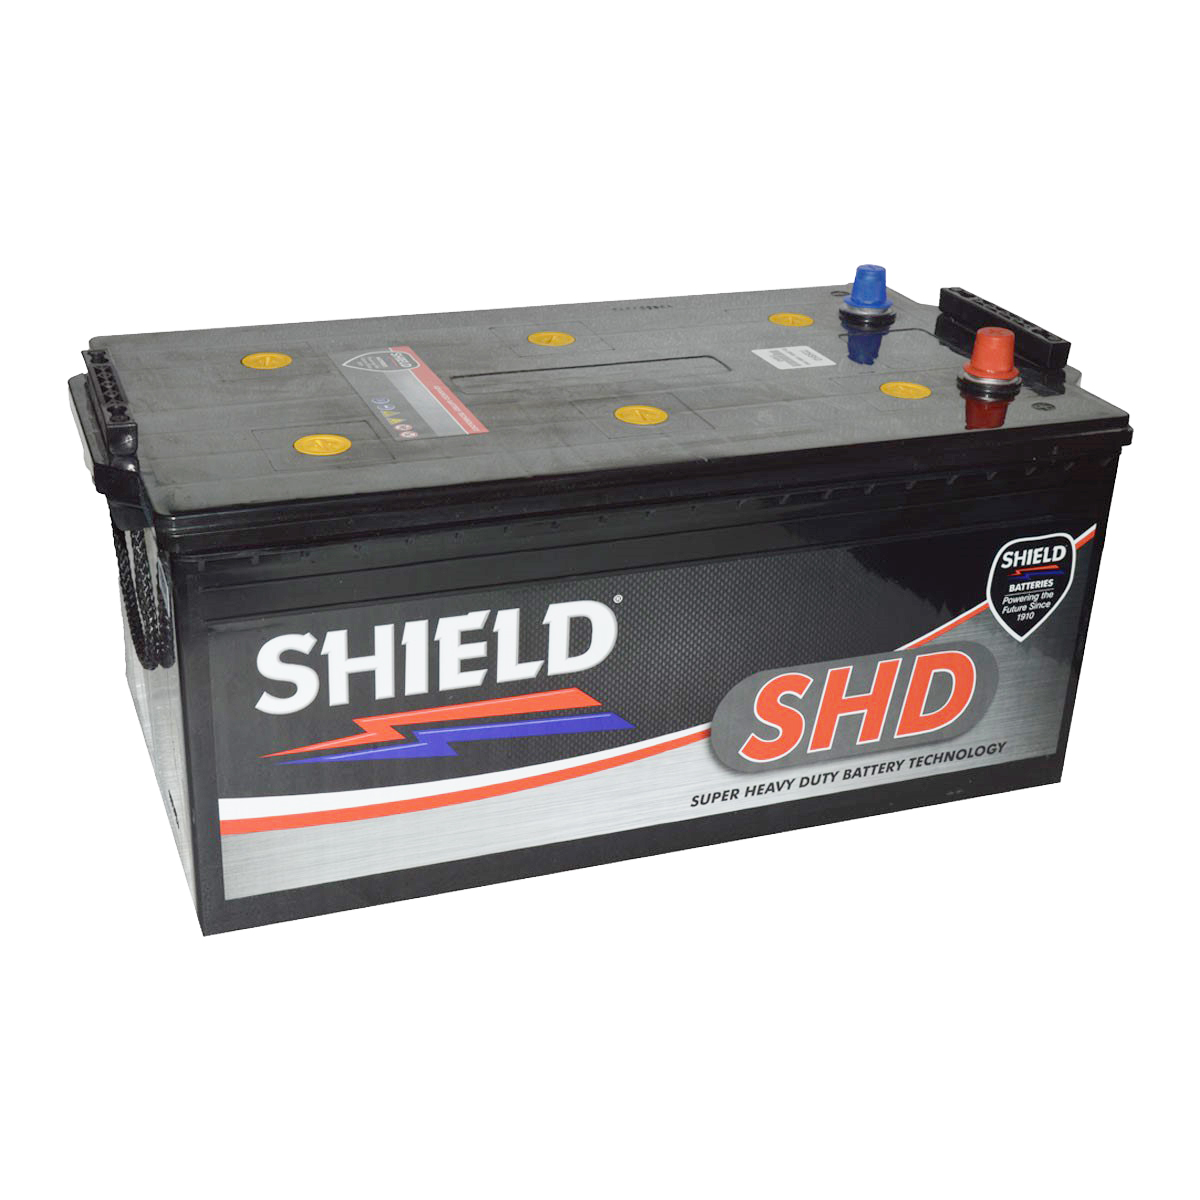 Shield-SHD-CV-Battery.jpg